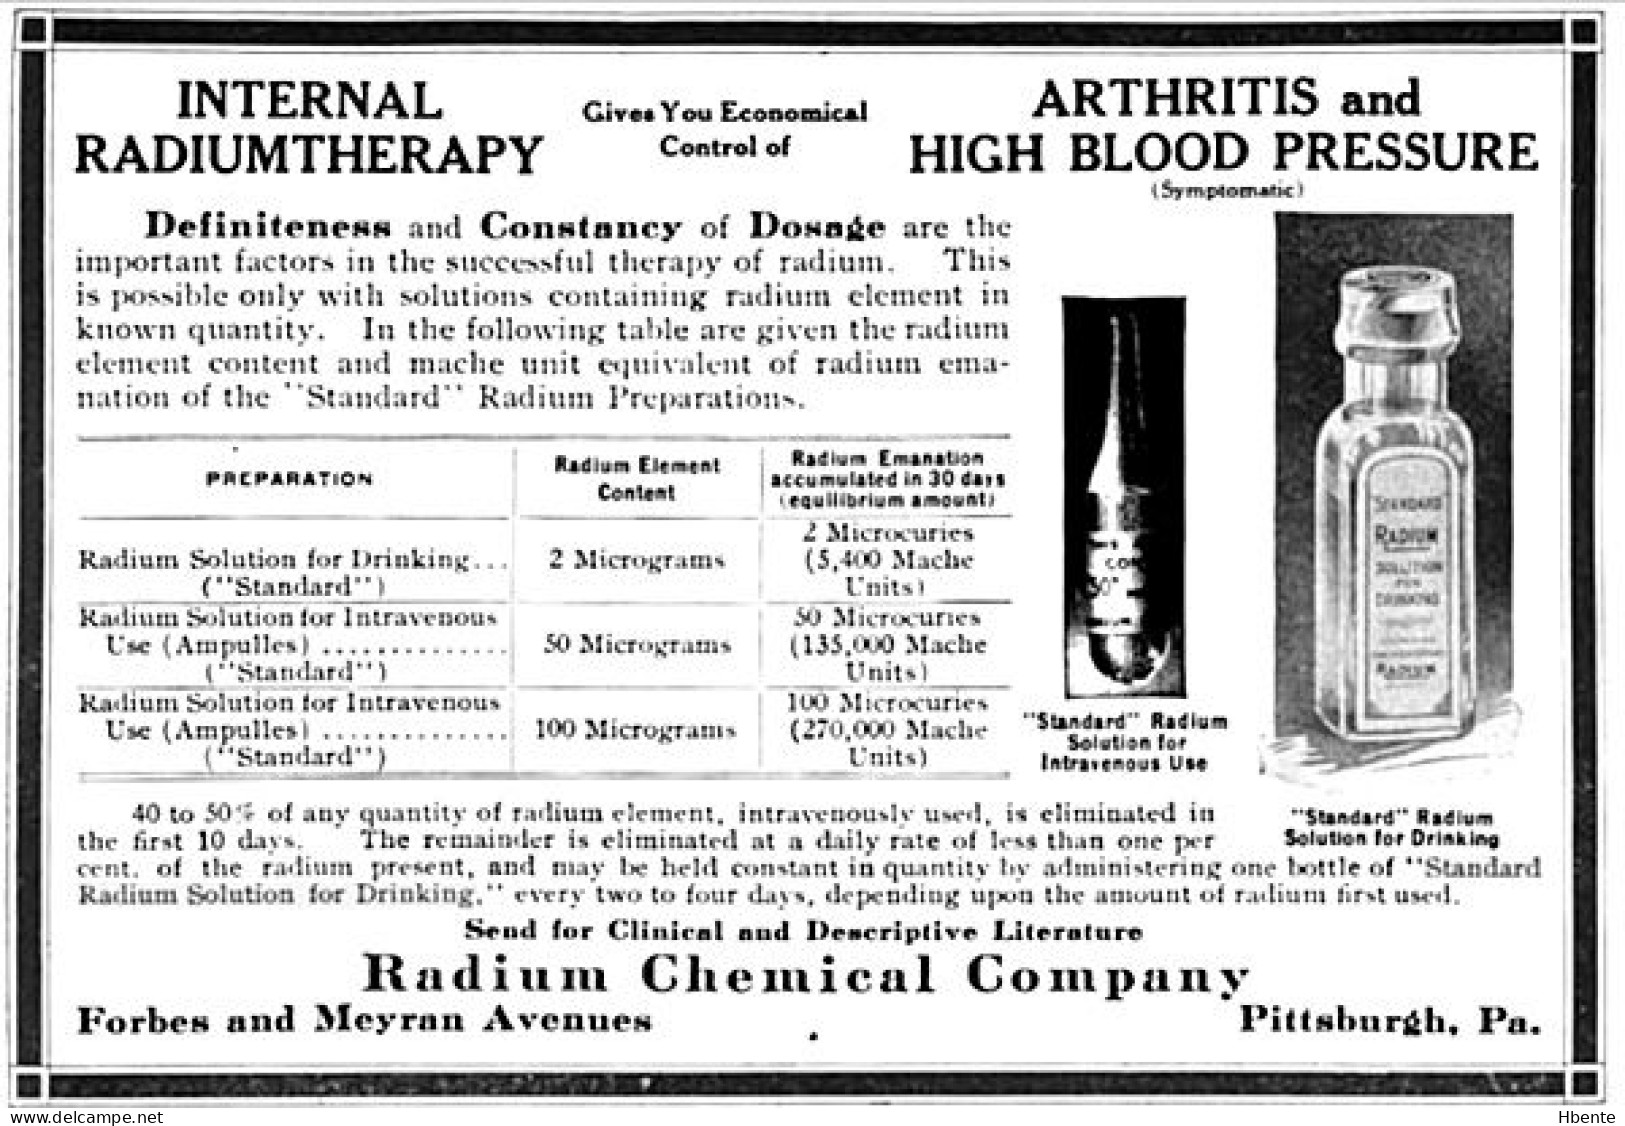 Radiumtherapy Arthritis High Blood Pressure Radium Chemical Company Pittsburgh USA (Photo) - Objects